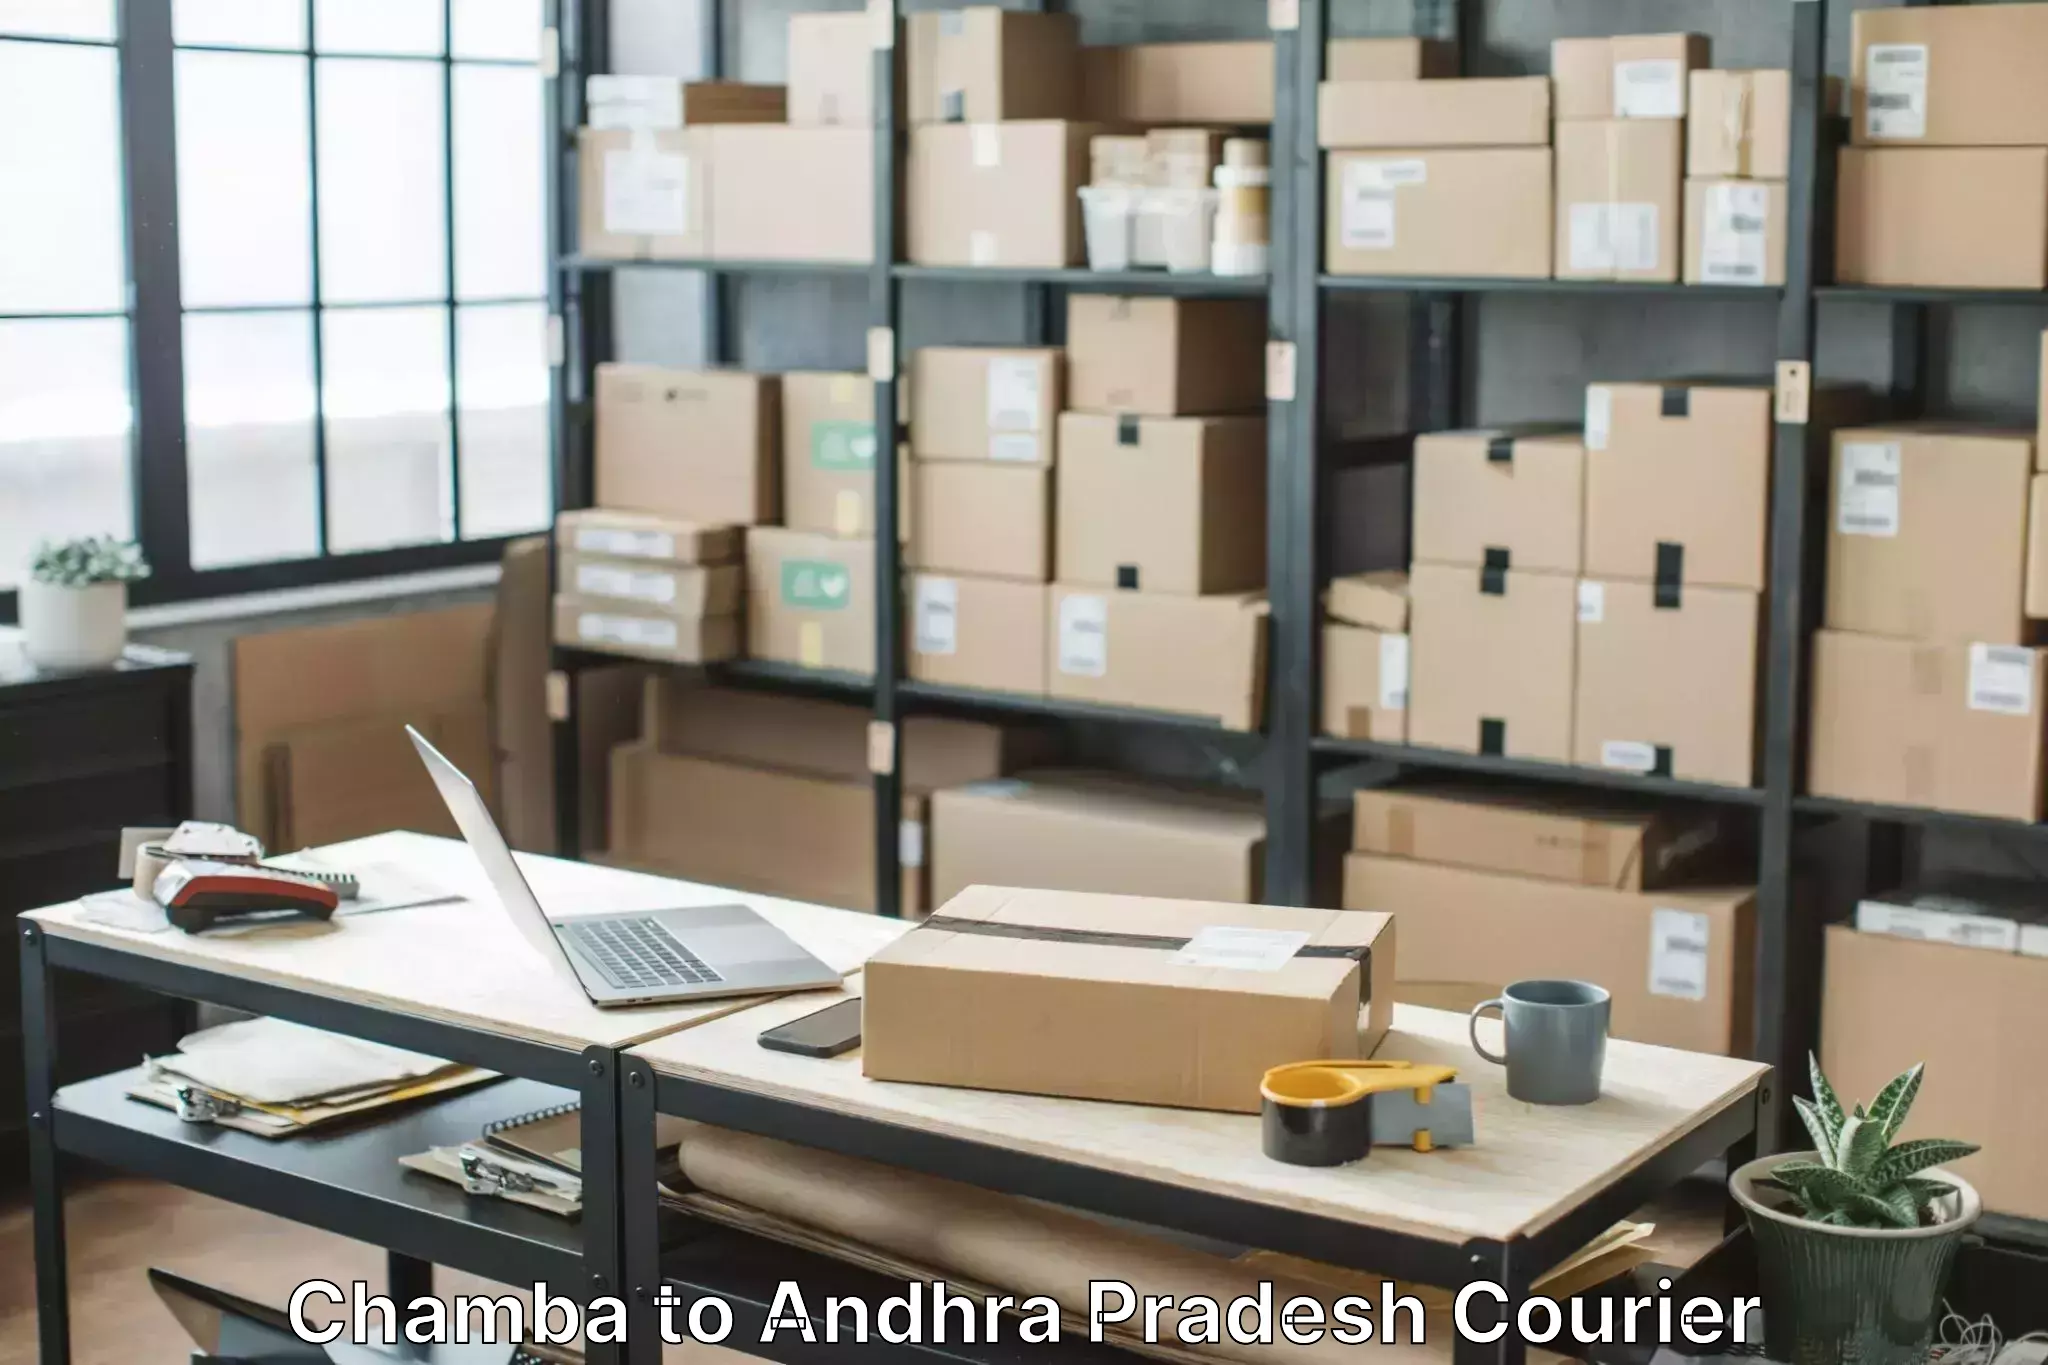 Professional moving company Chamba to Andhra Pradesh